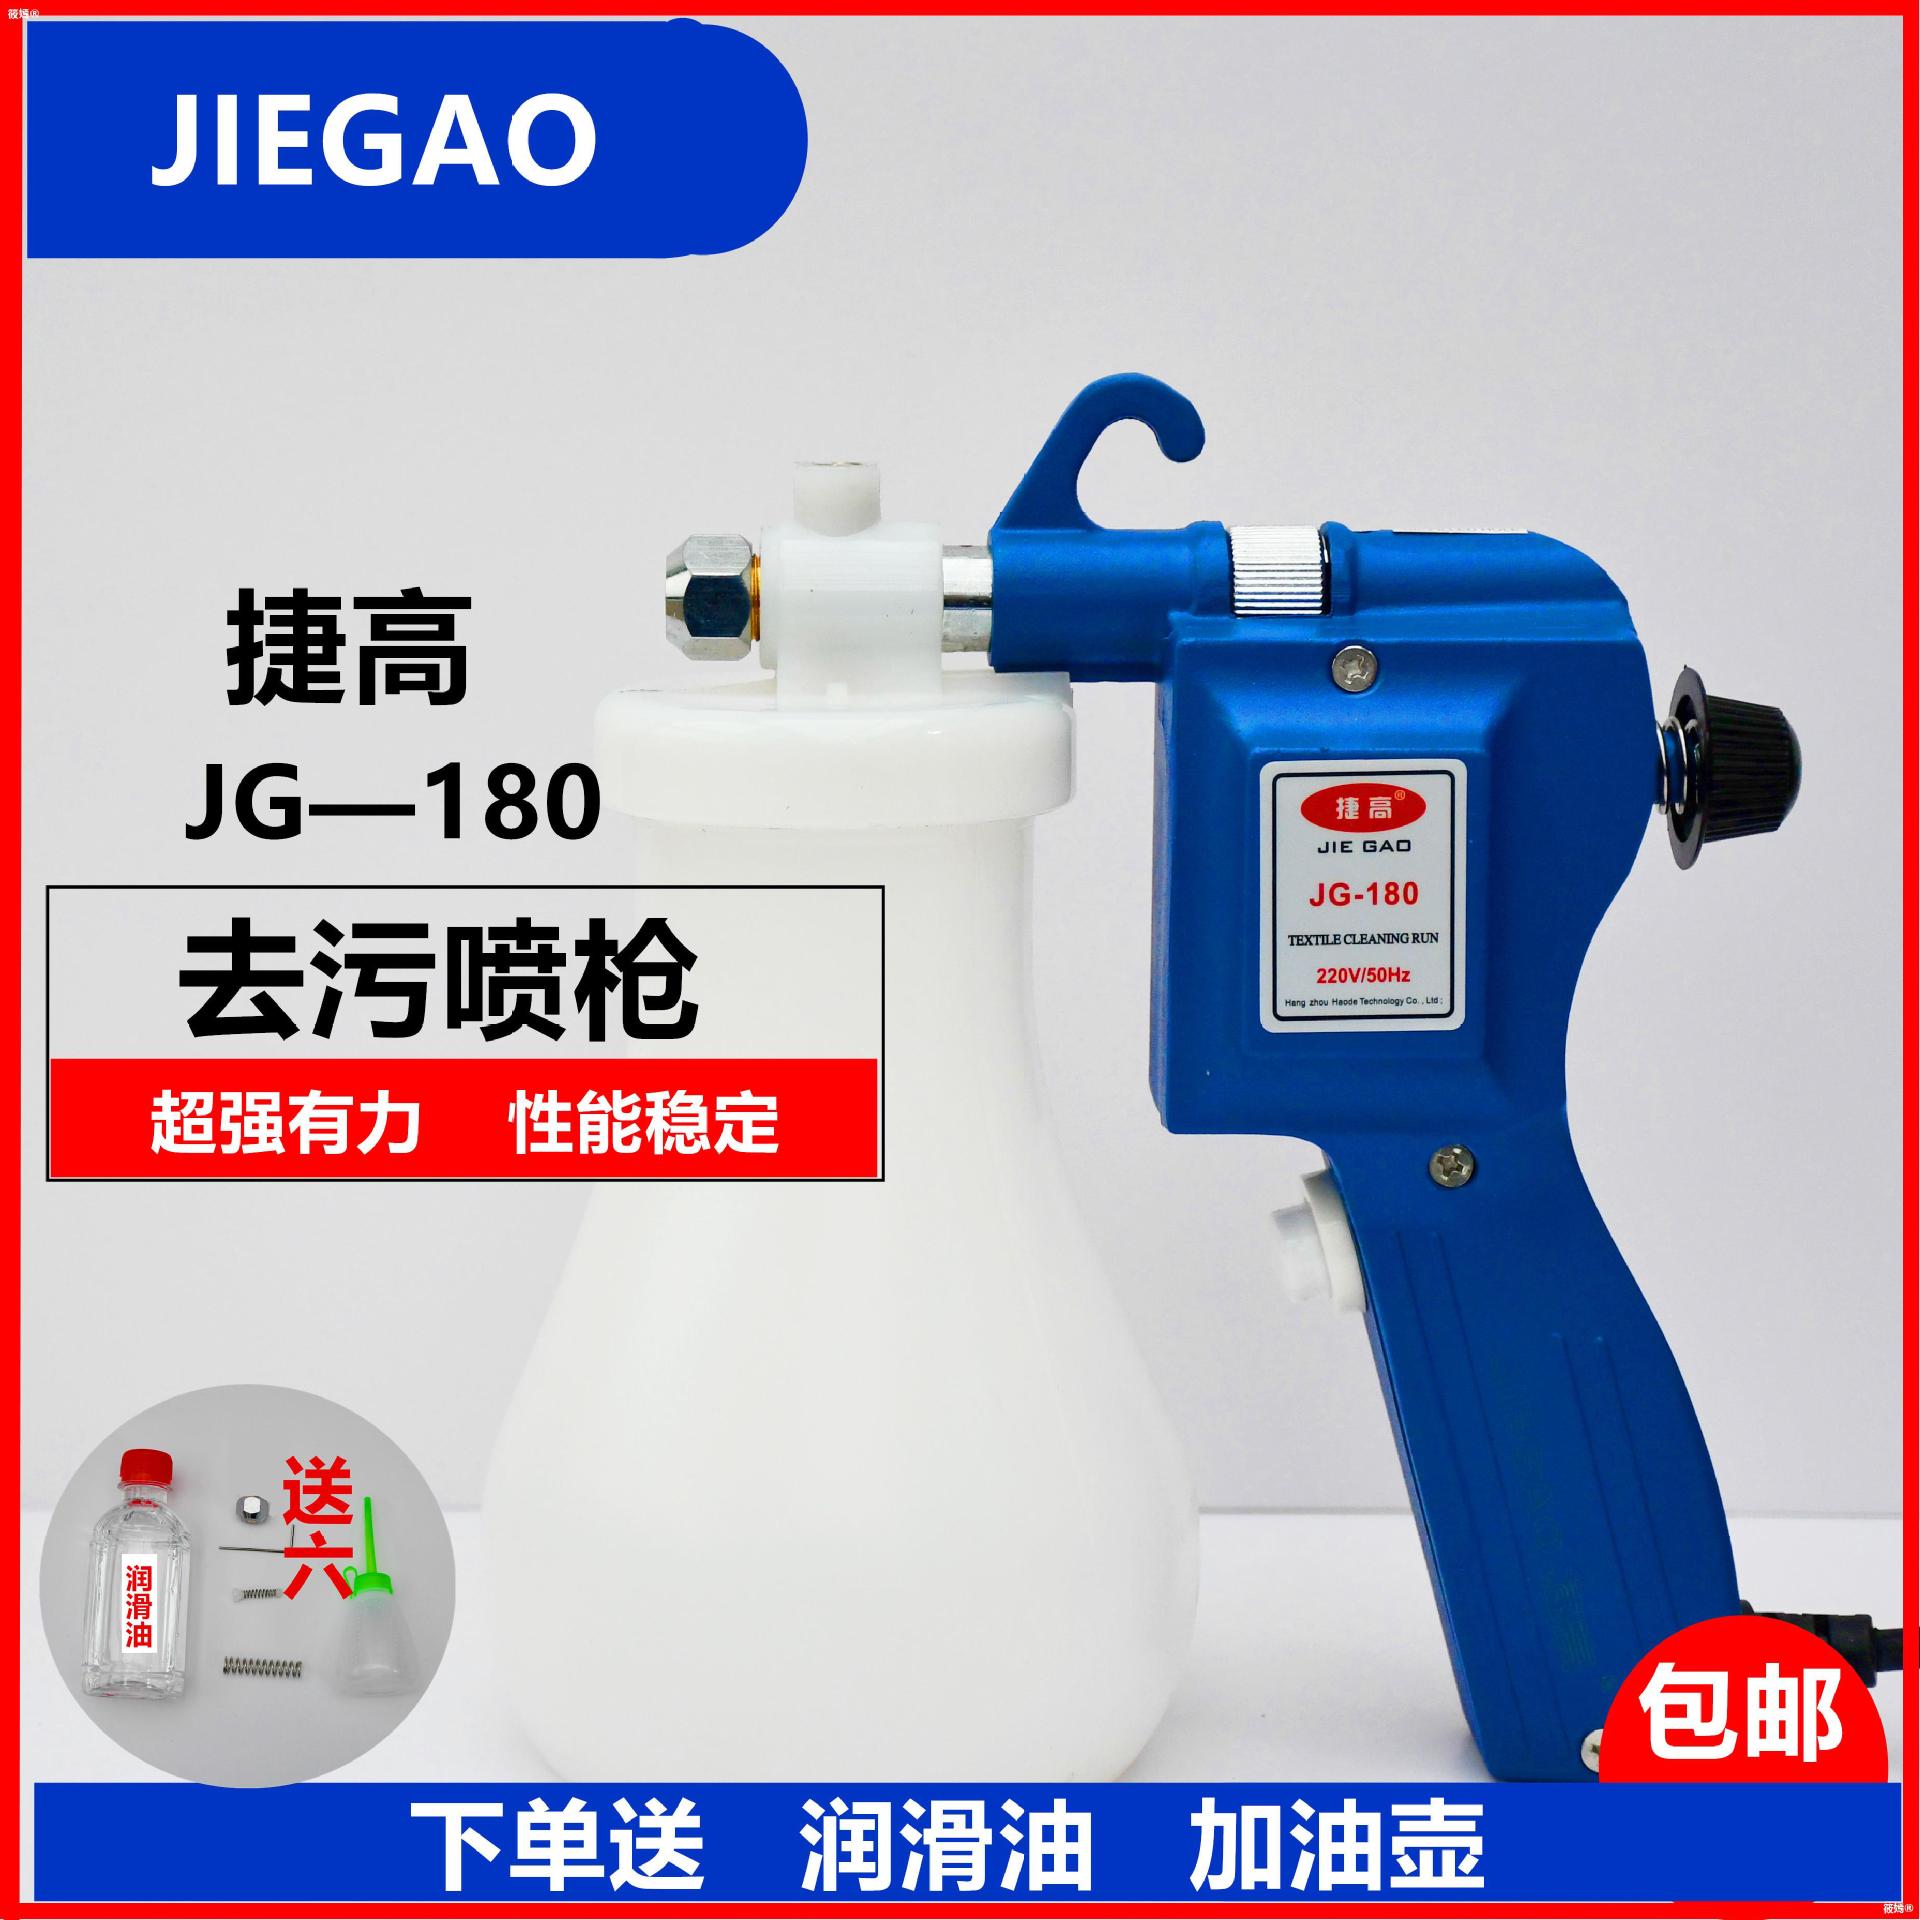 clothing decontamination Spray gun Electric clean Spray gun Wenwan Bodhi Clear high pressure Machine tool cleaning gun